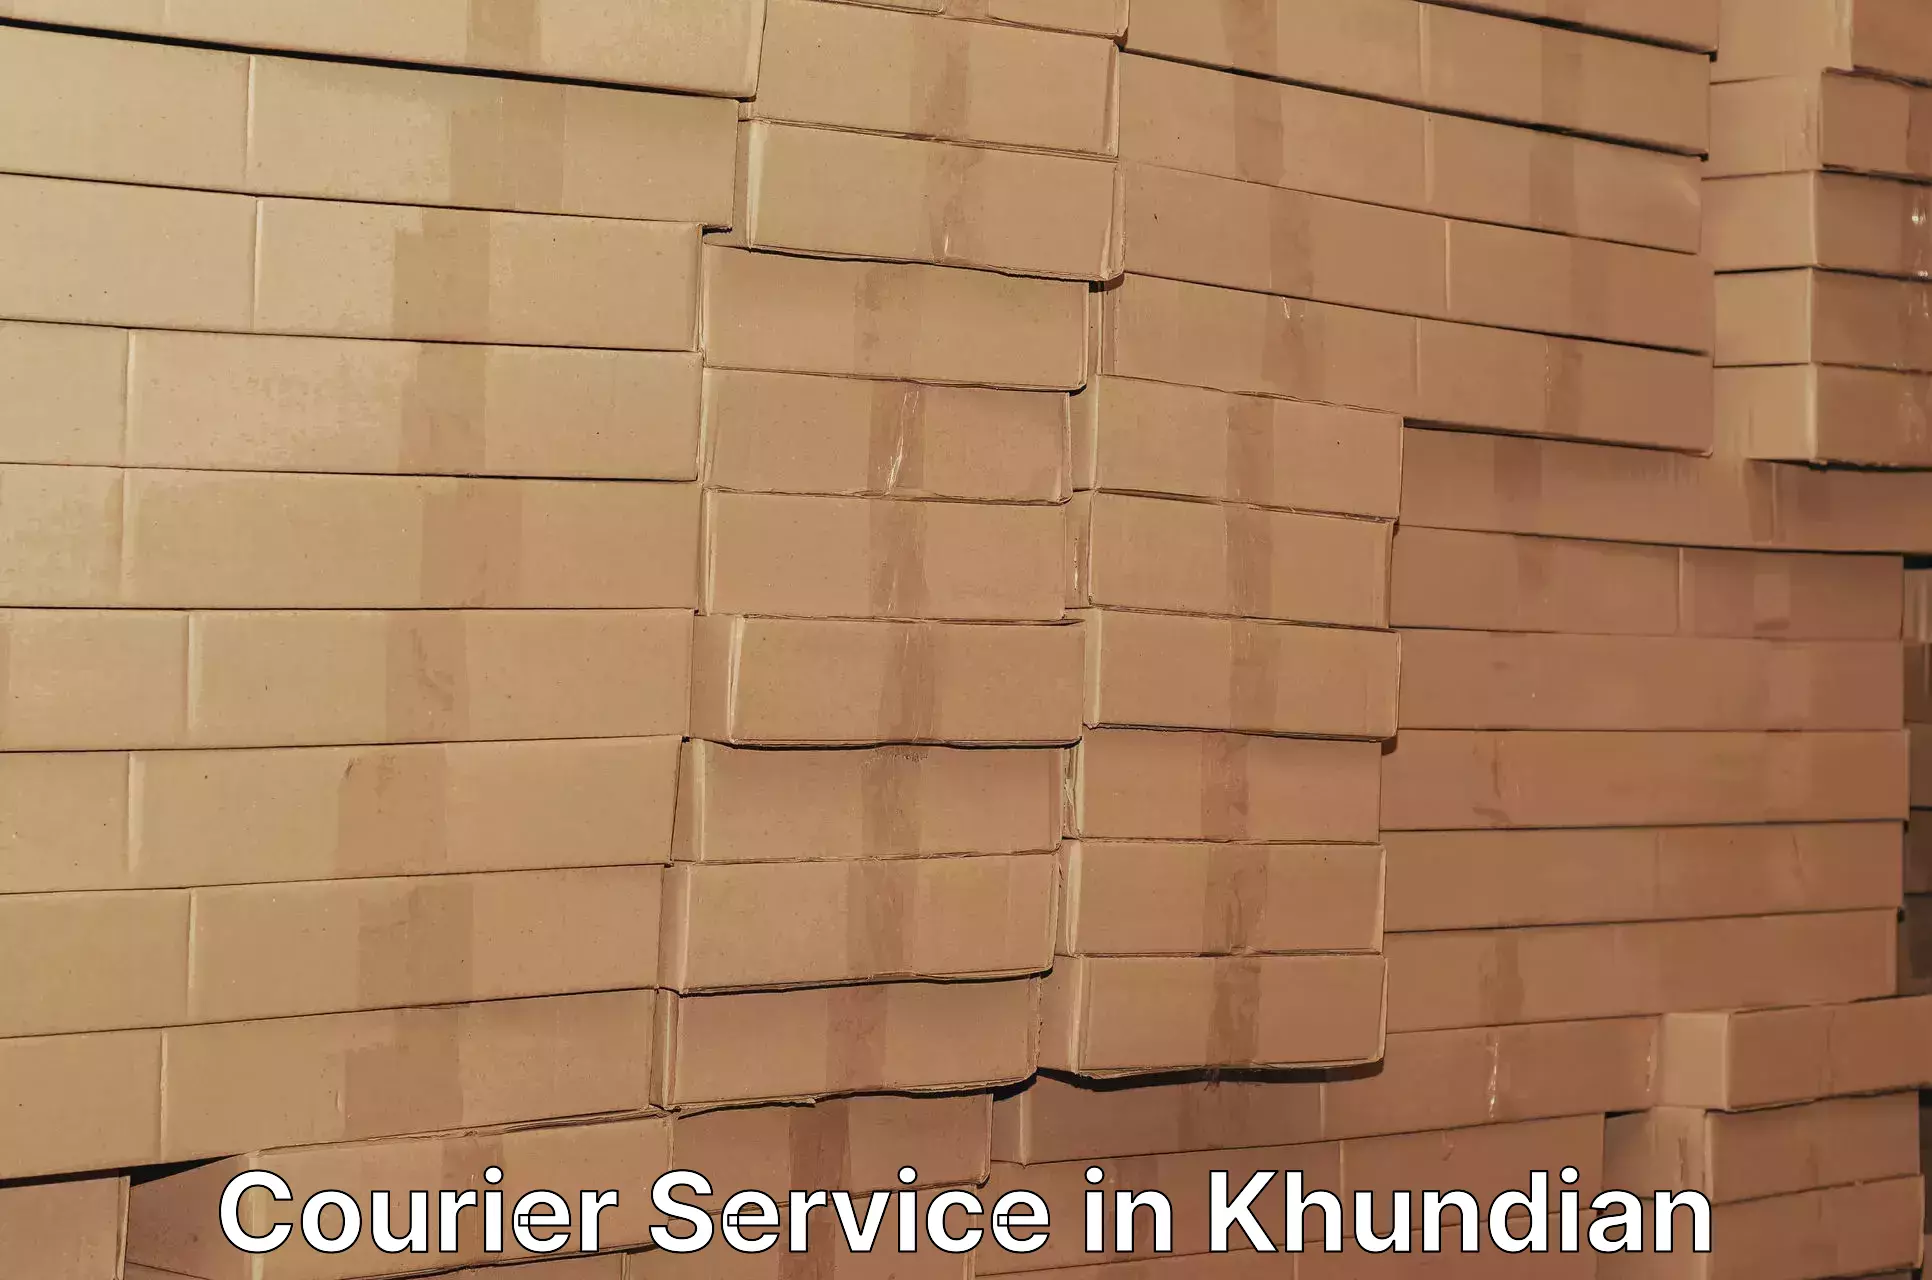 Fast parcel dispatch in Khundian